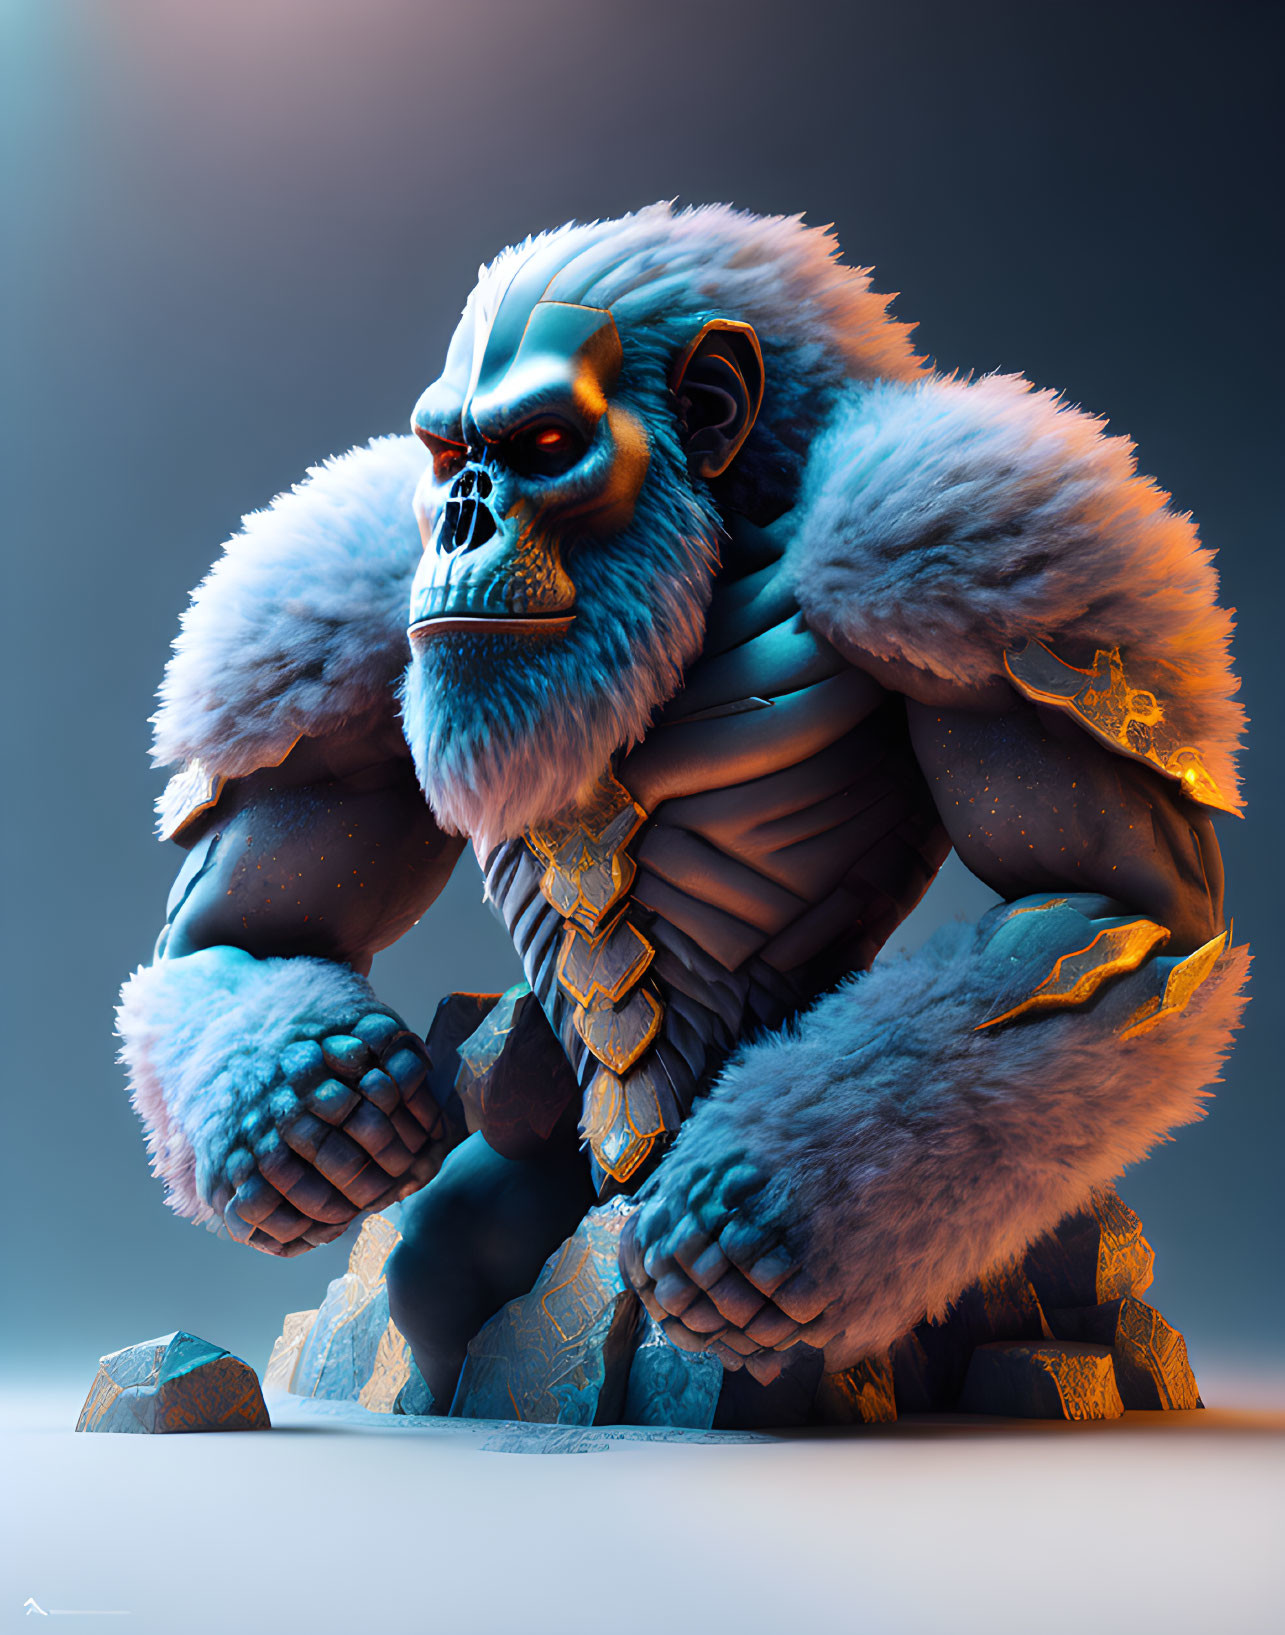 Fantasy blue gorilla with golden armor in mystical setting